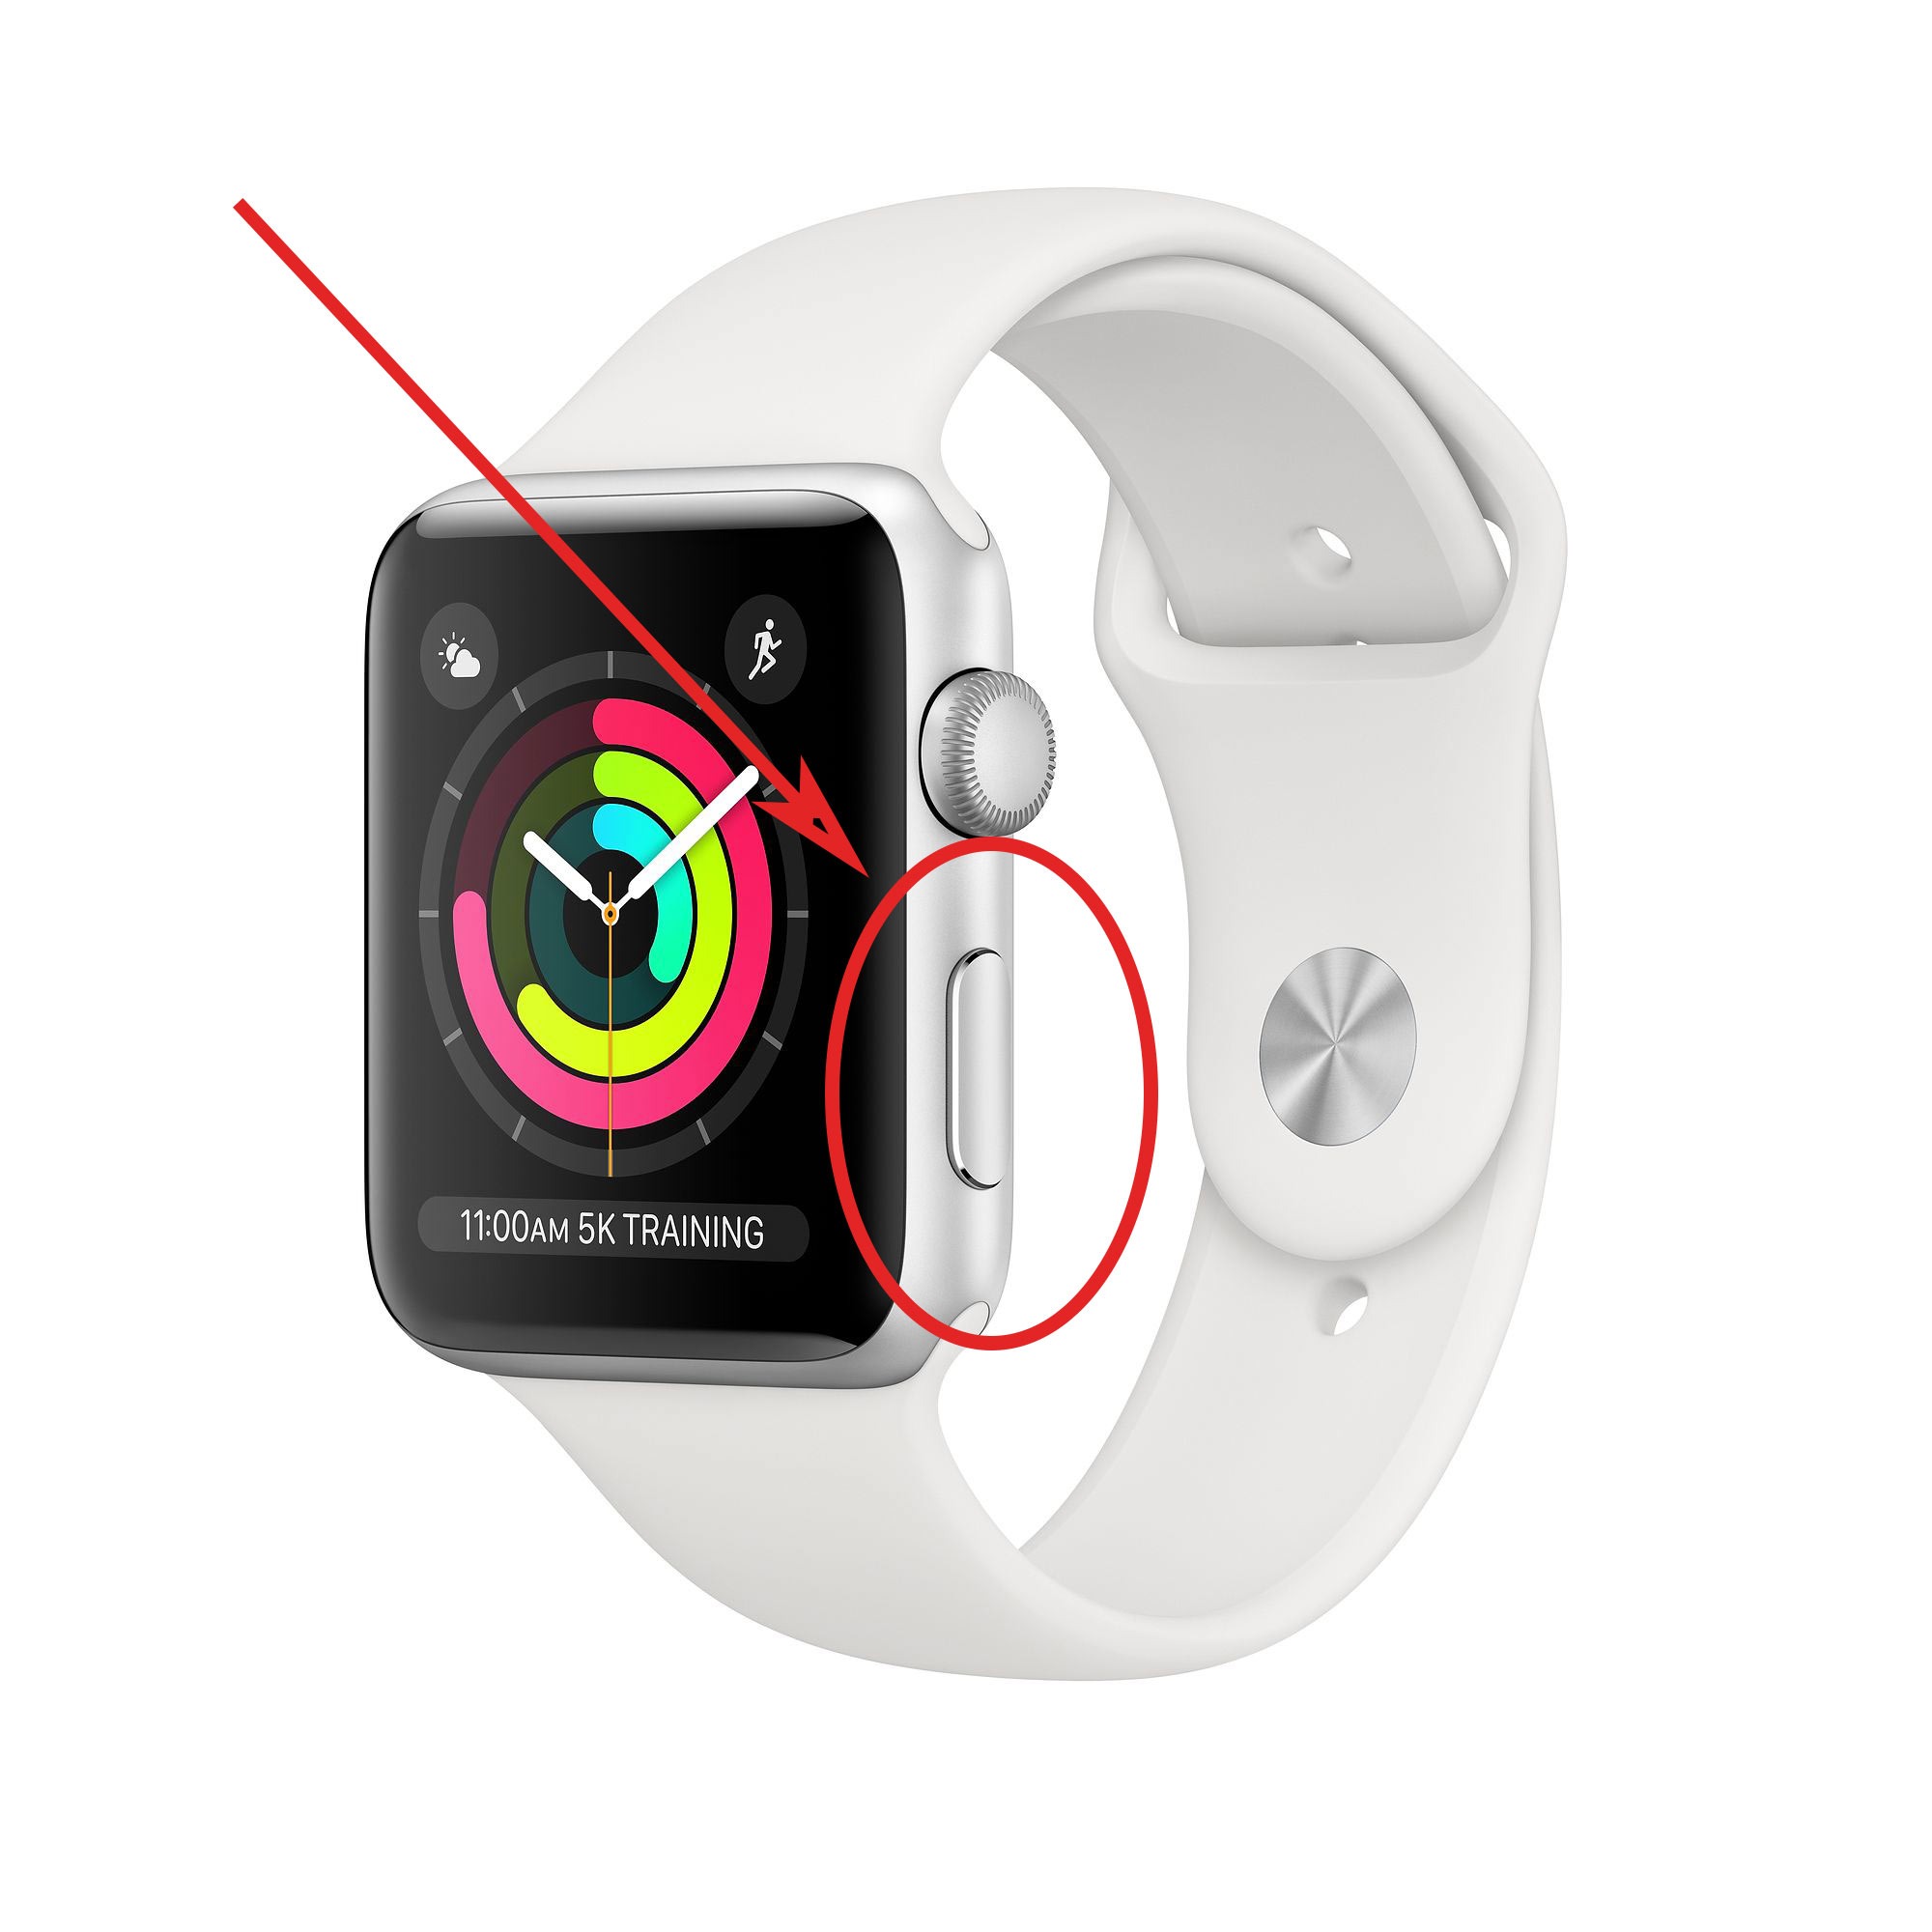 Apple Watch Always on Display Not Working